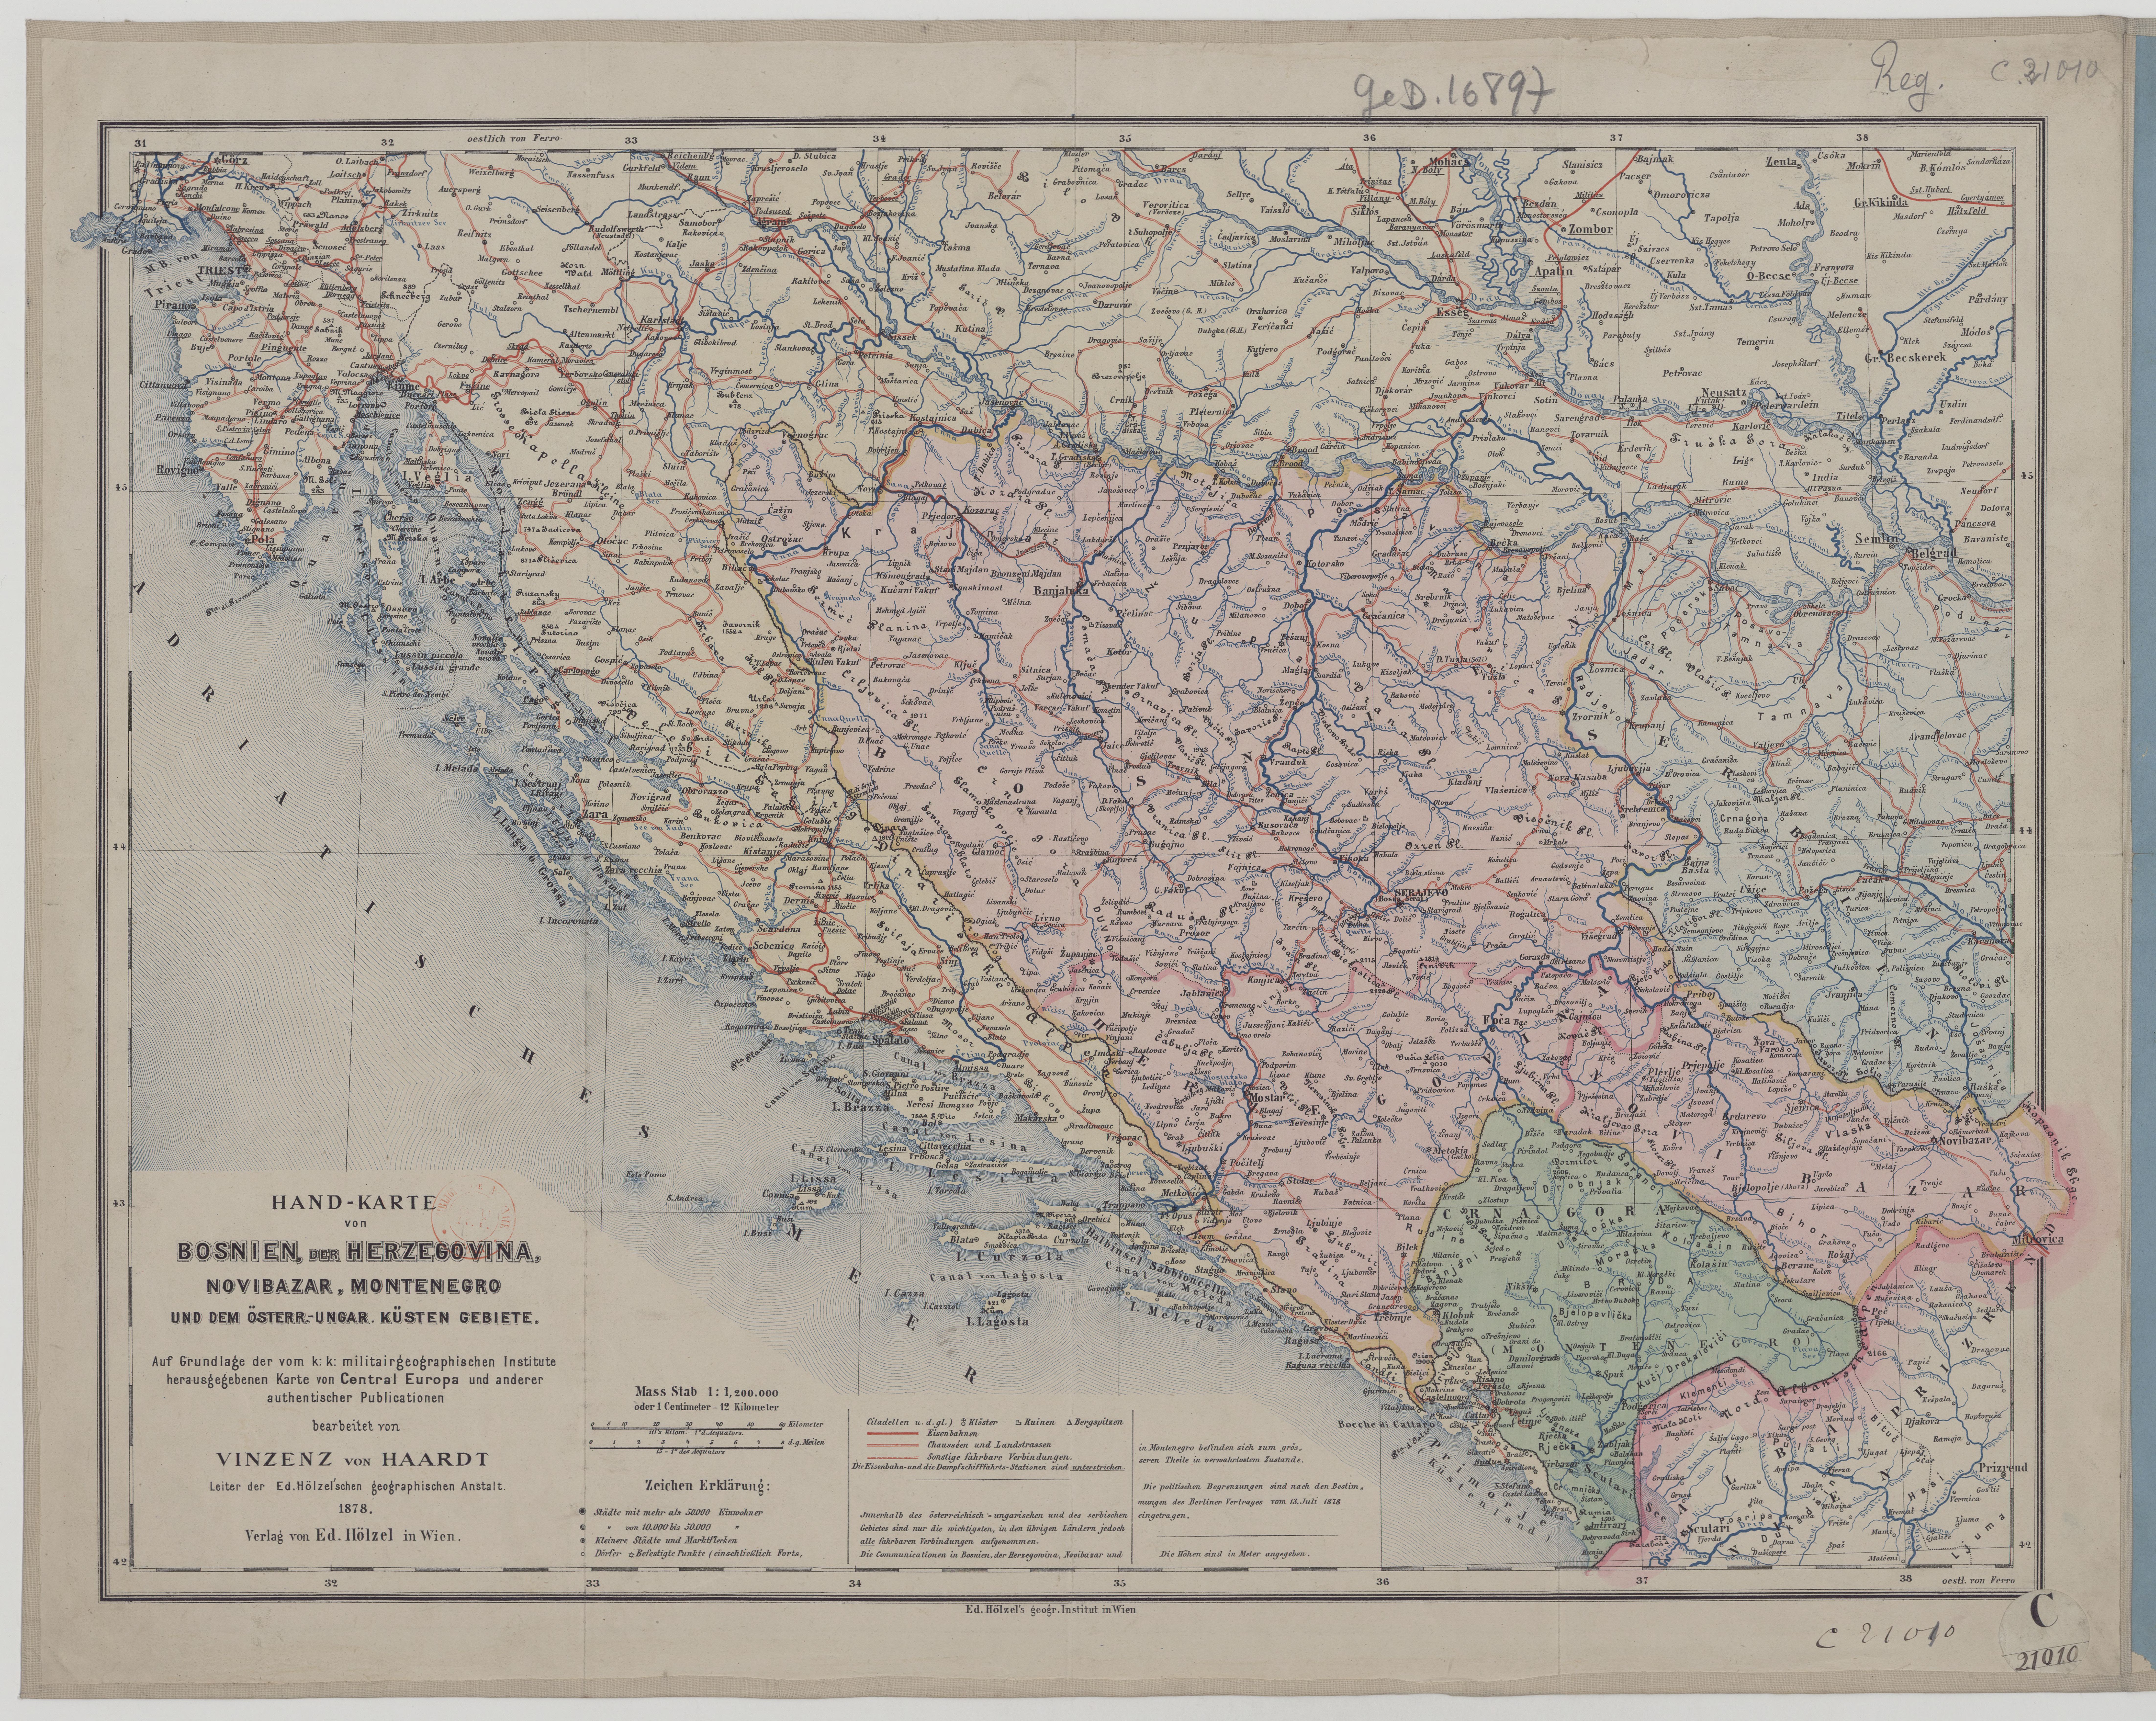 File:1878 - Hand-Karte von Bosnien, der Herzegovina, Novibazar